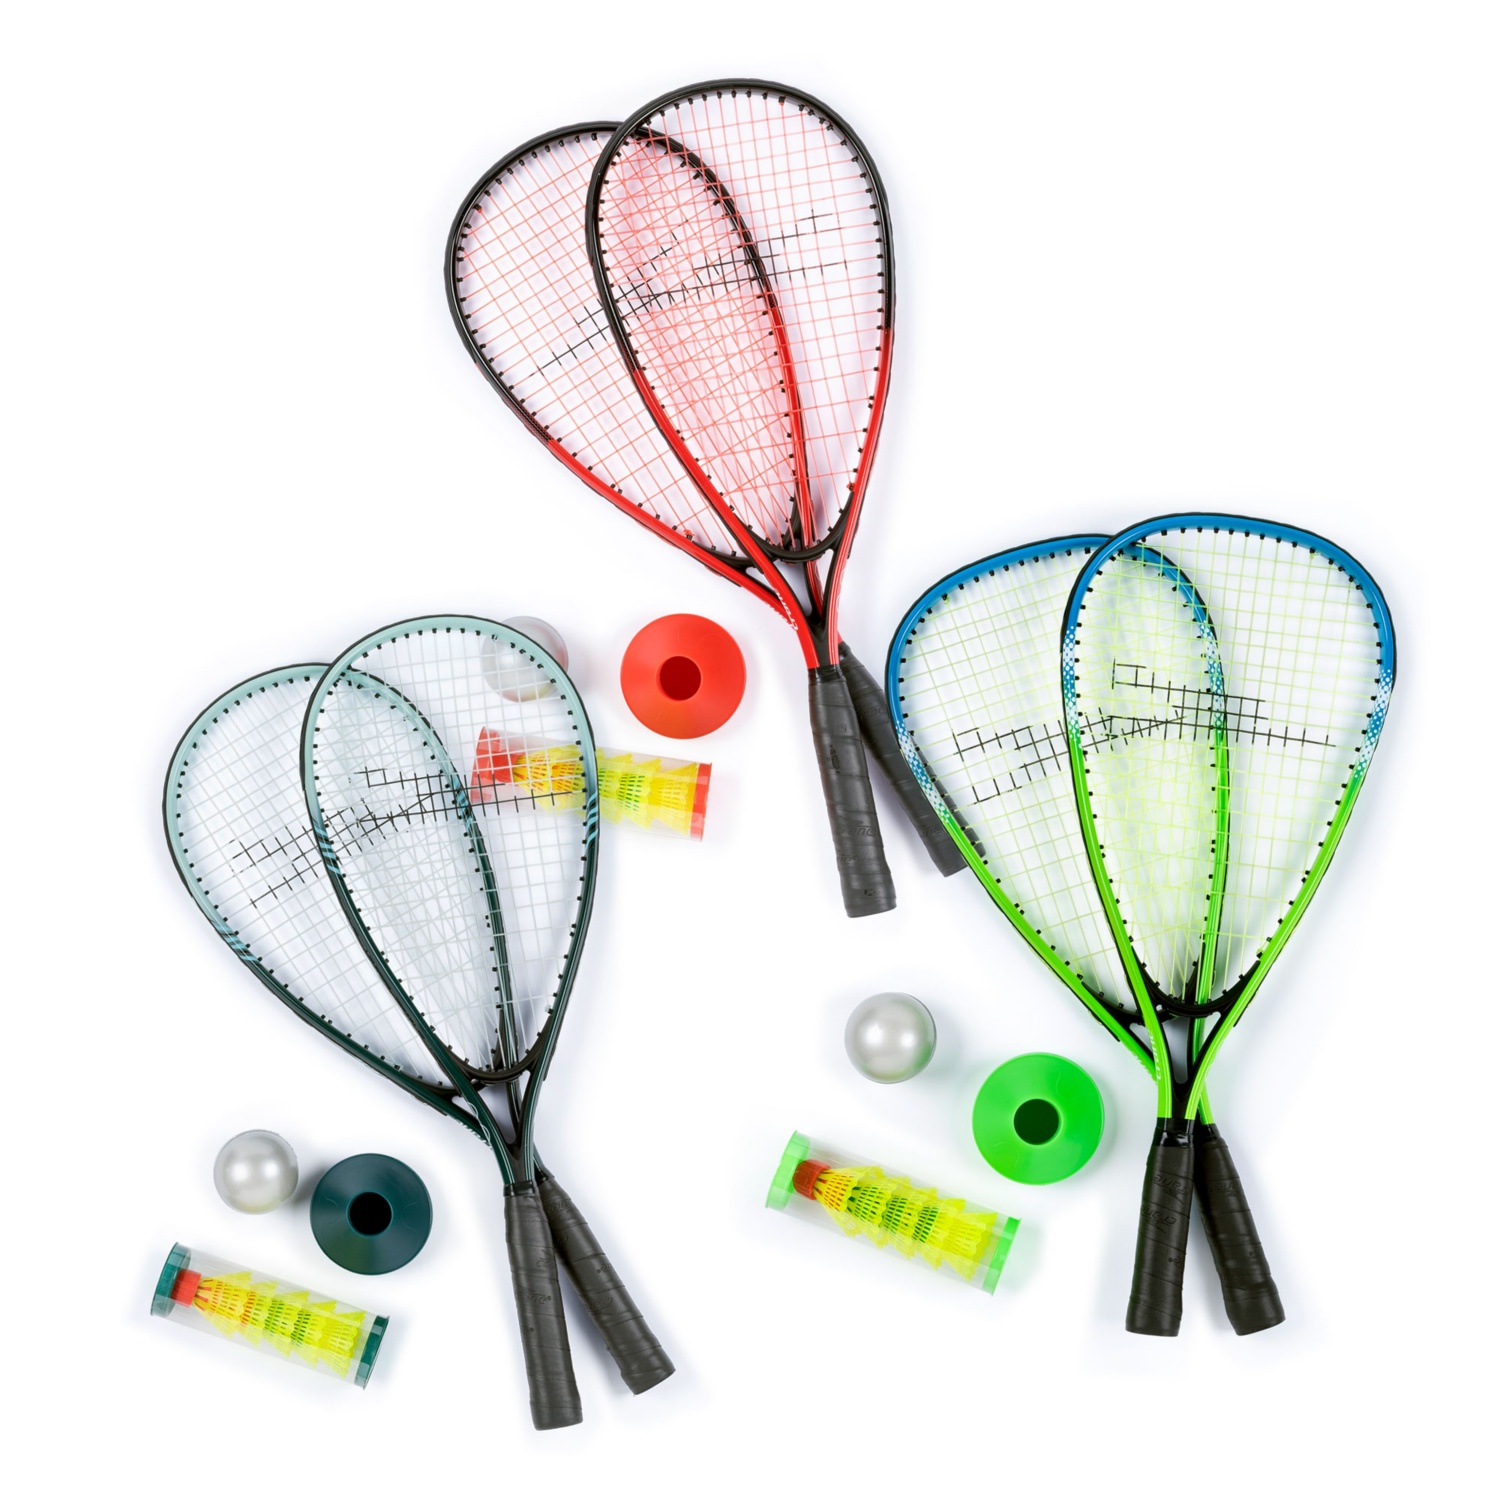 CRANE Turbo Badminton Set